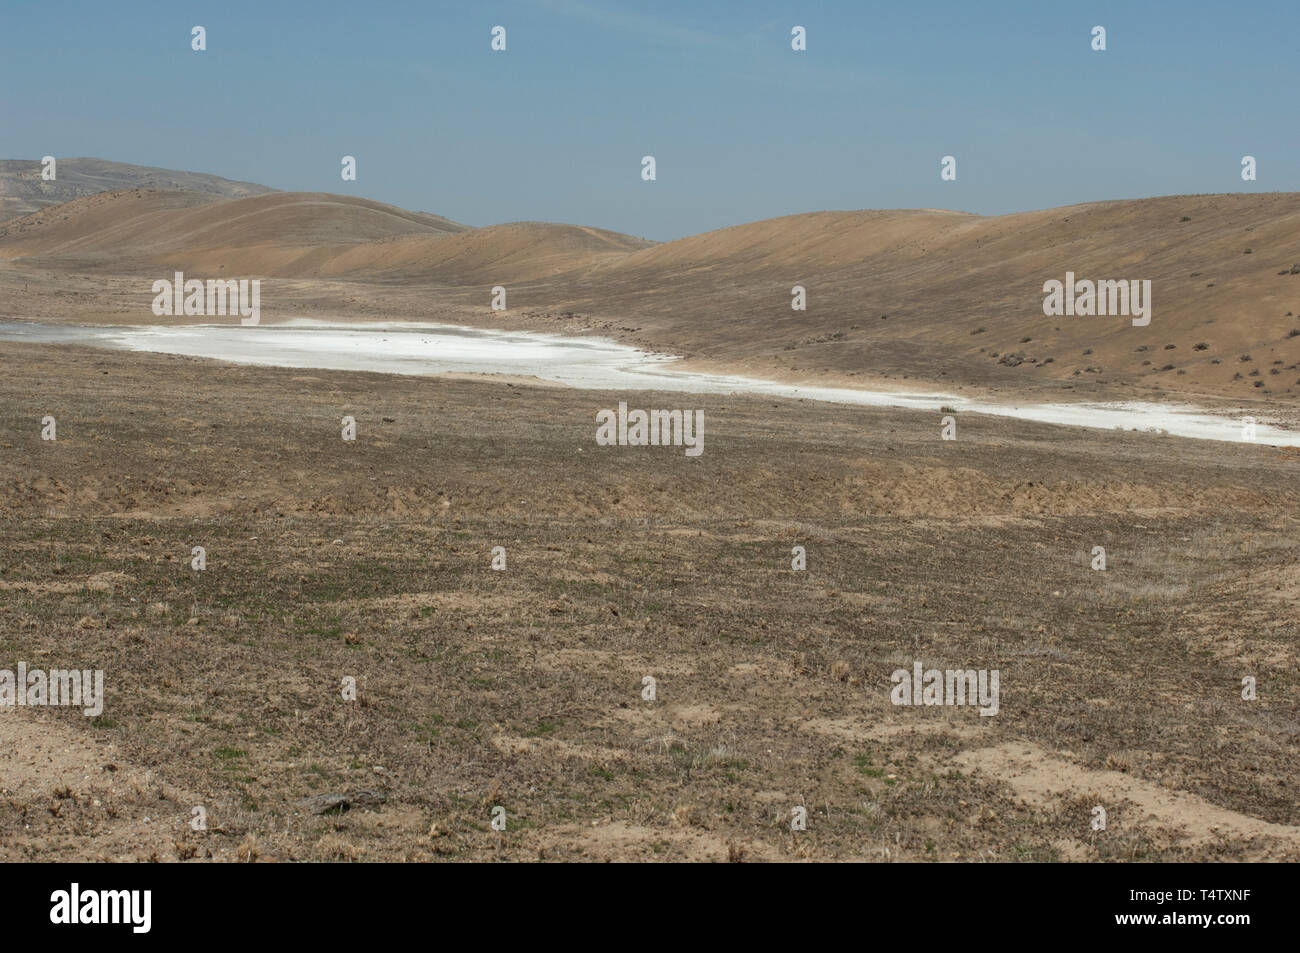 Soda Lake on the San Andreas Fault, Carrizo Plain National Monument, California. Digital photograph Stock Photo